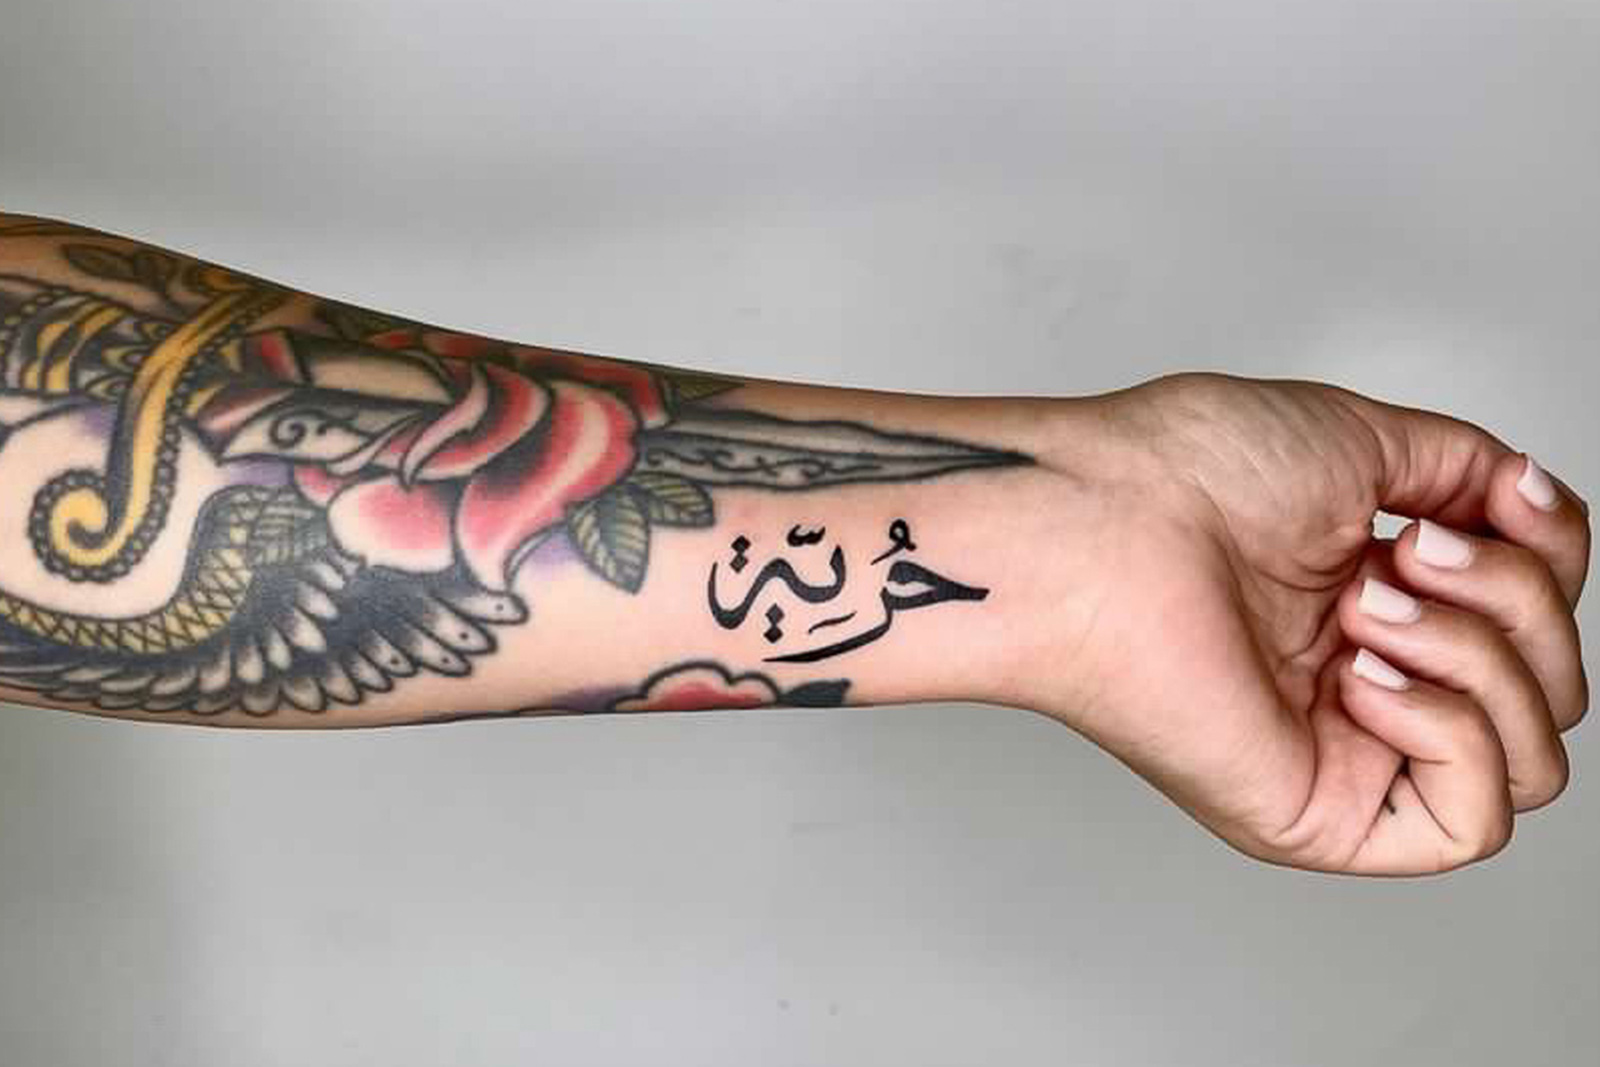 Micro Arabic script tattoo on the inner forearm.